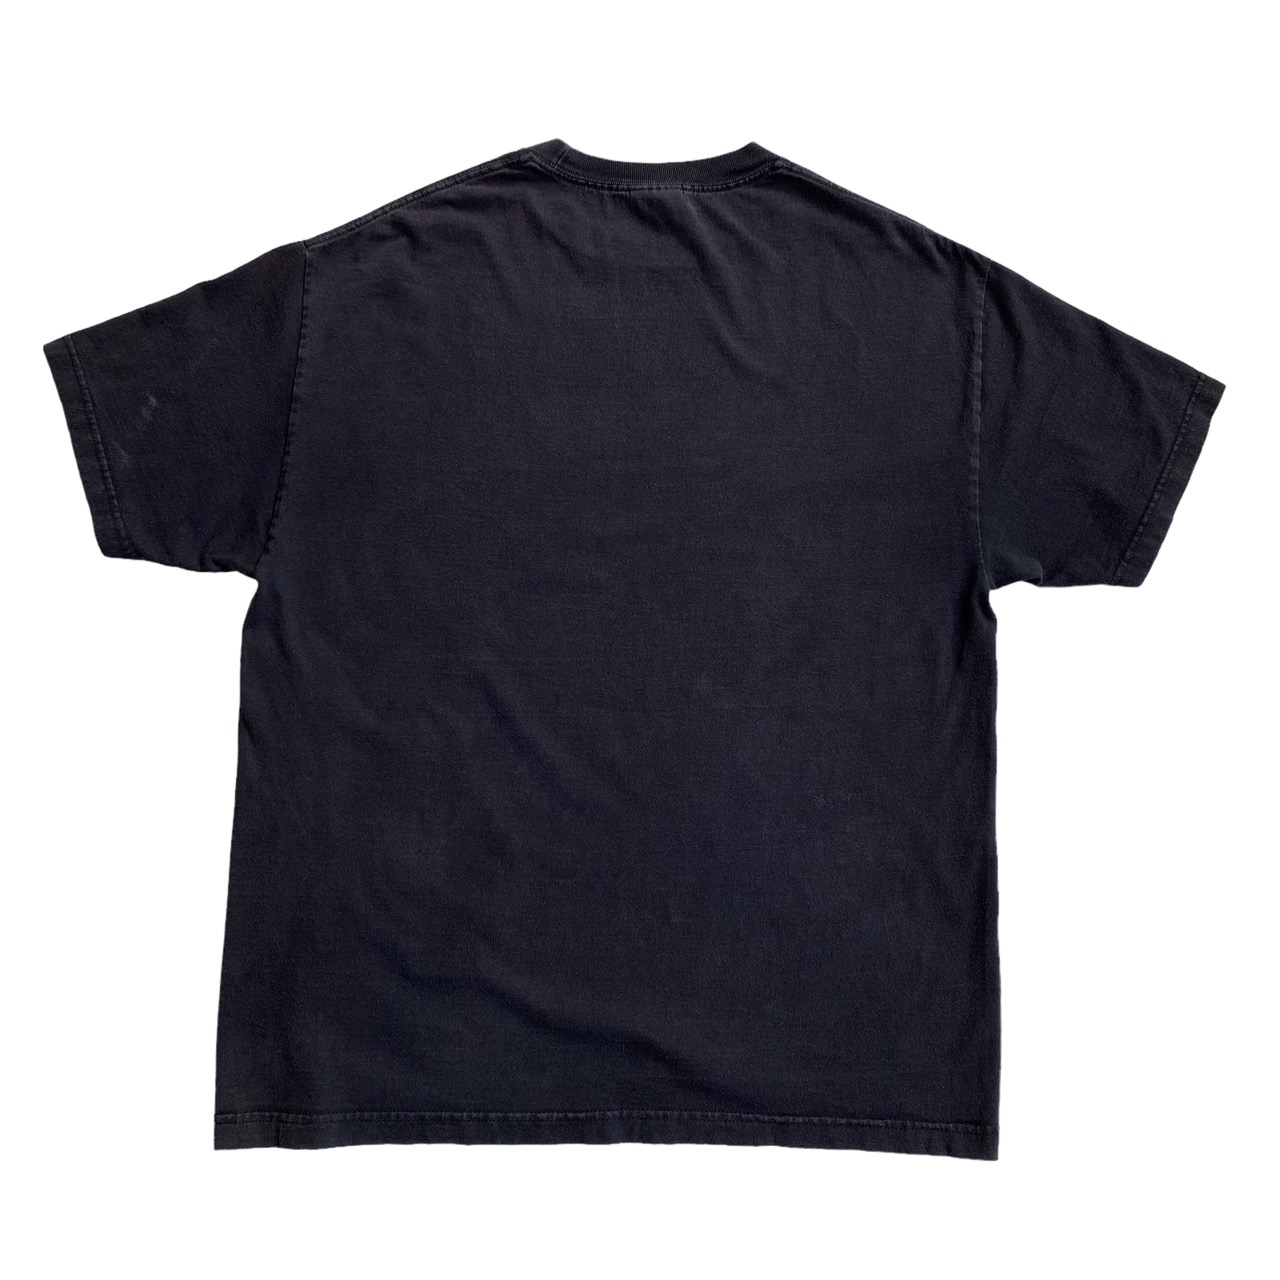 Alstyle Apparel & Activewear 90's Printed T-Shirt “John Lennon